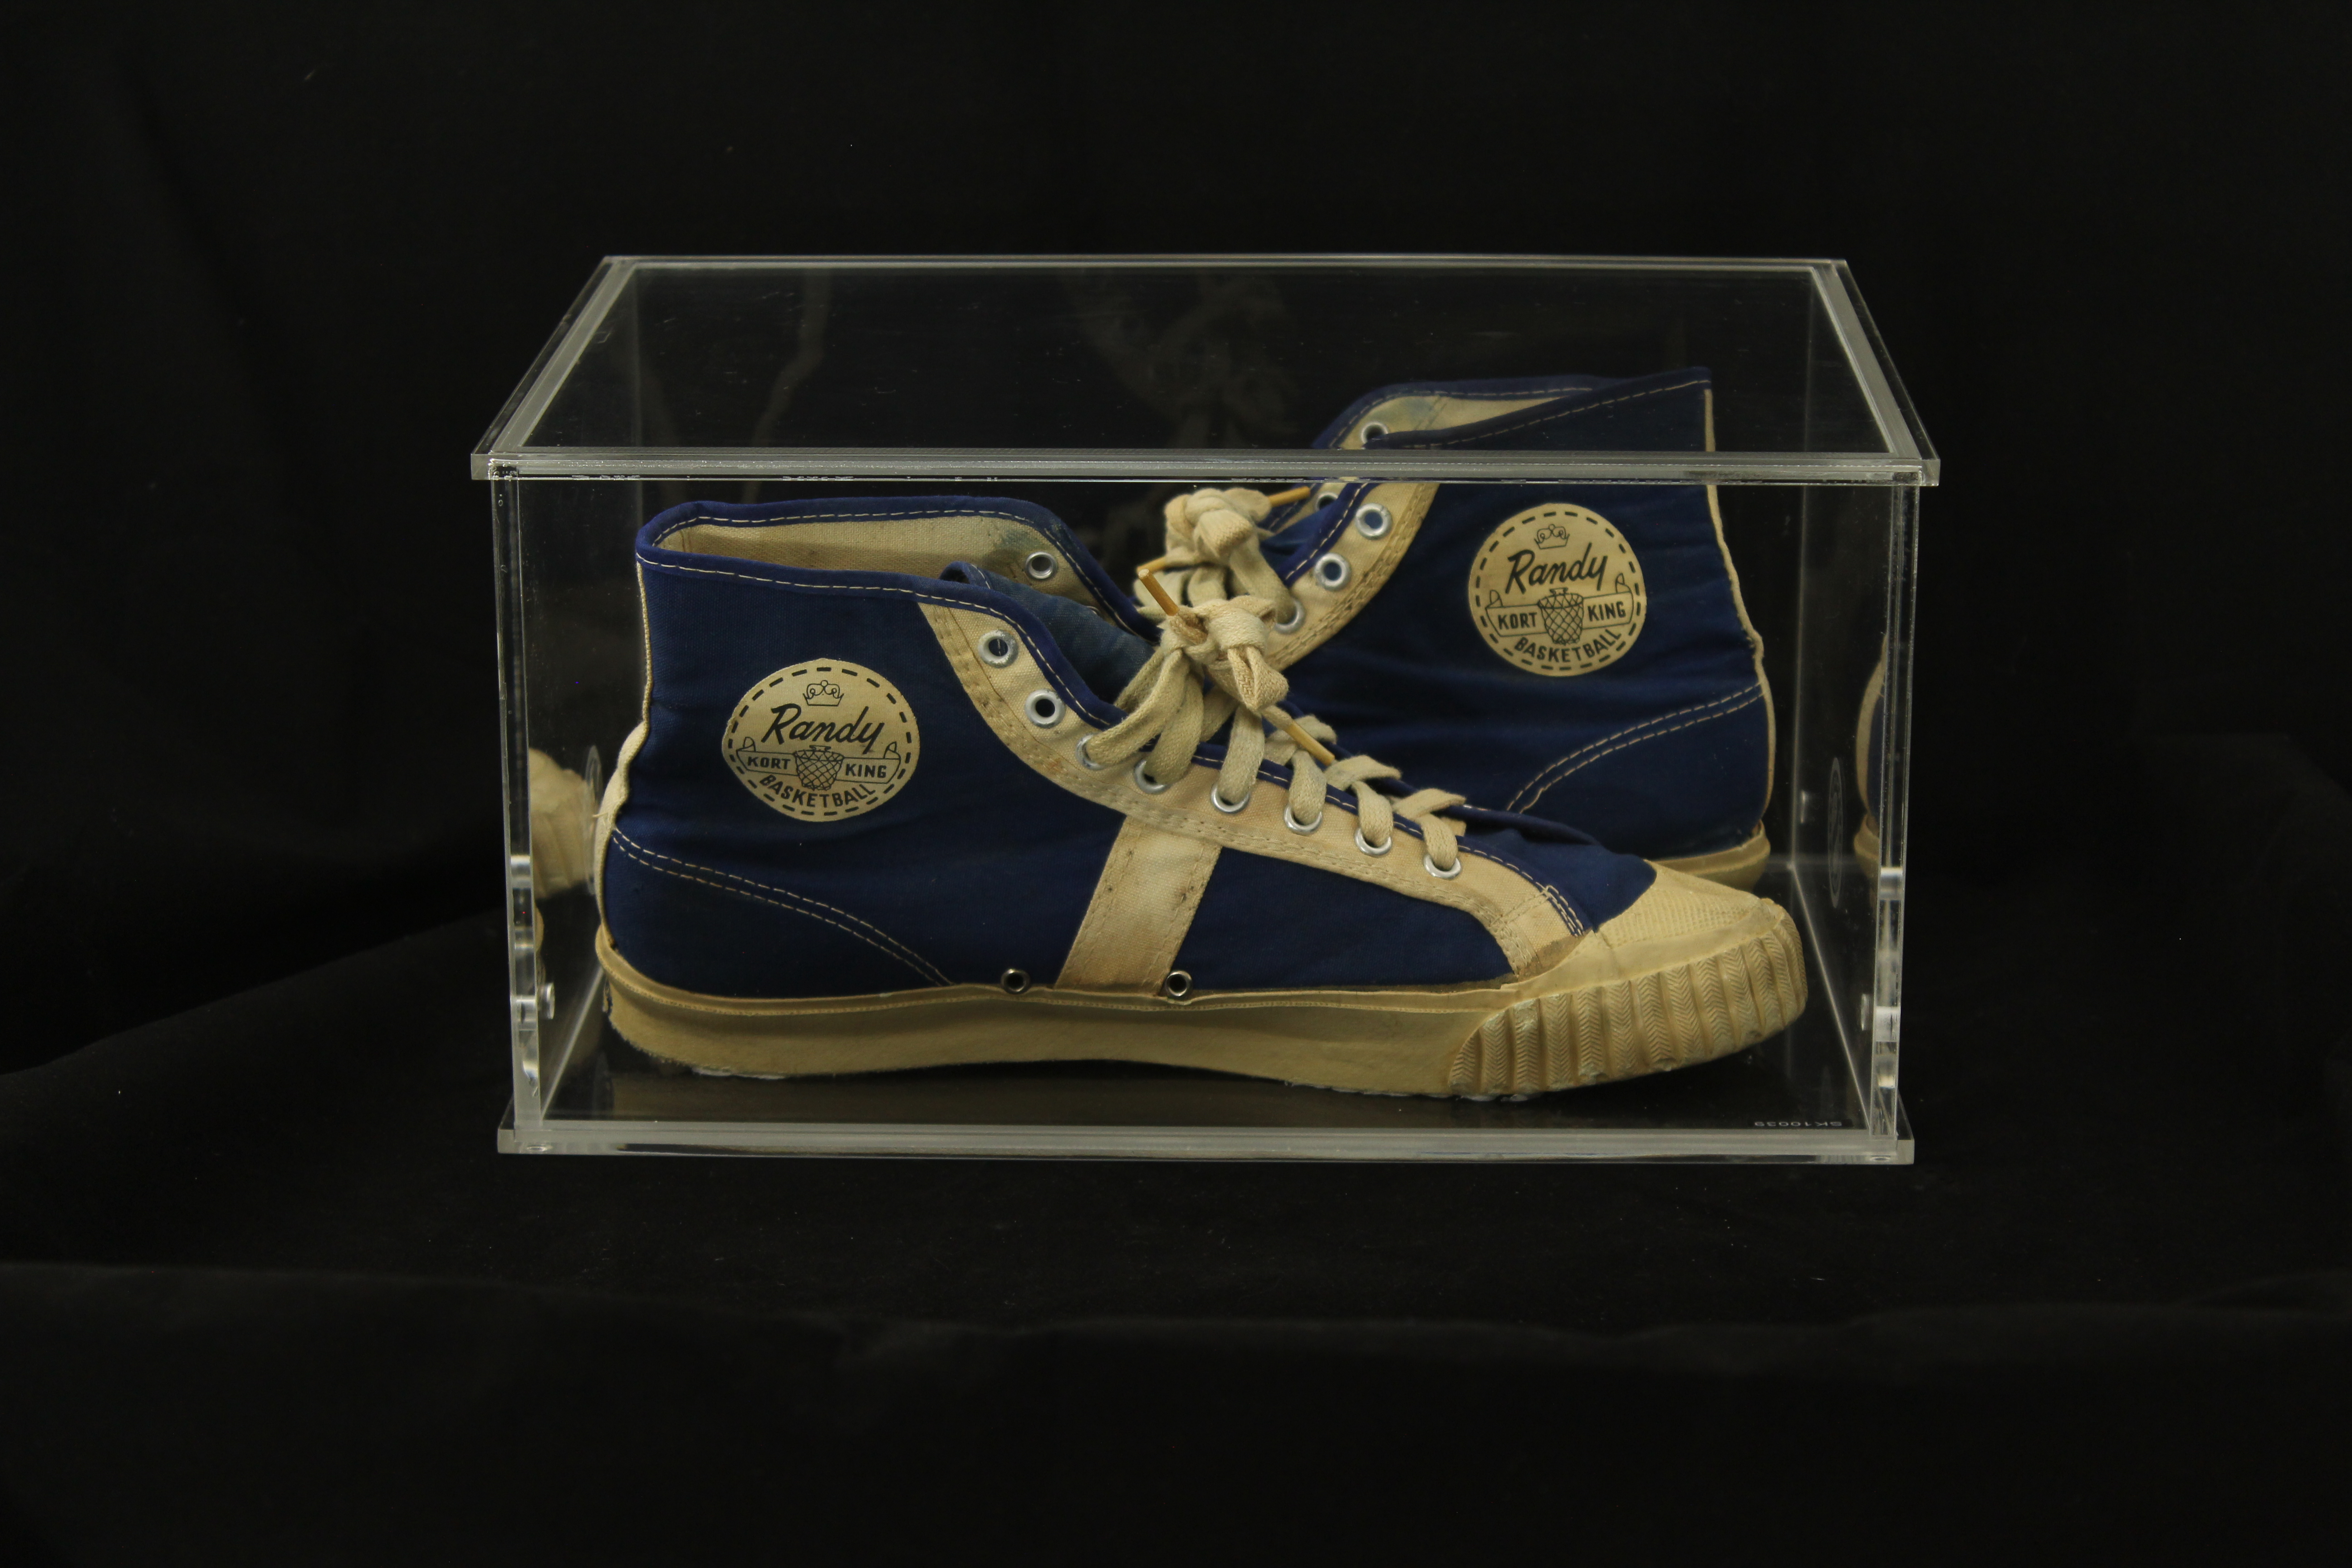 image of a vintage pair of sneakers